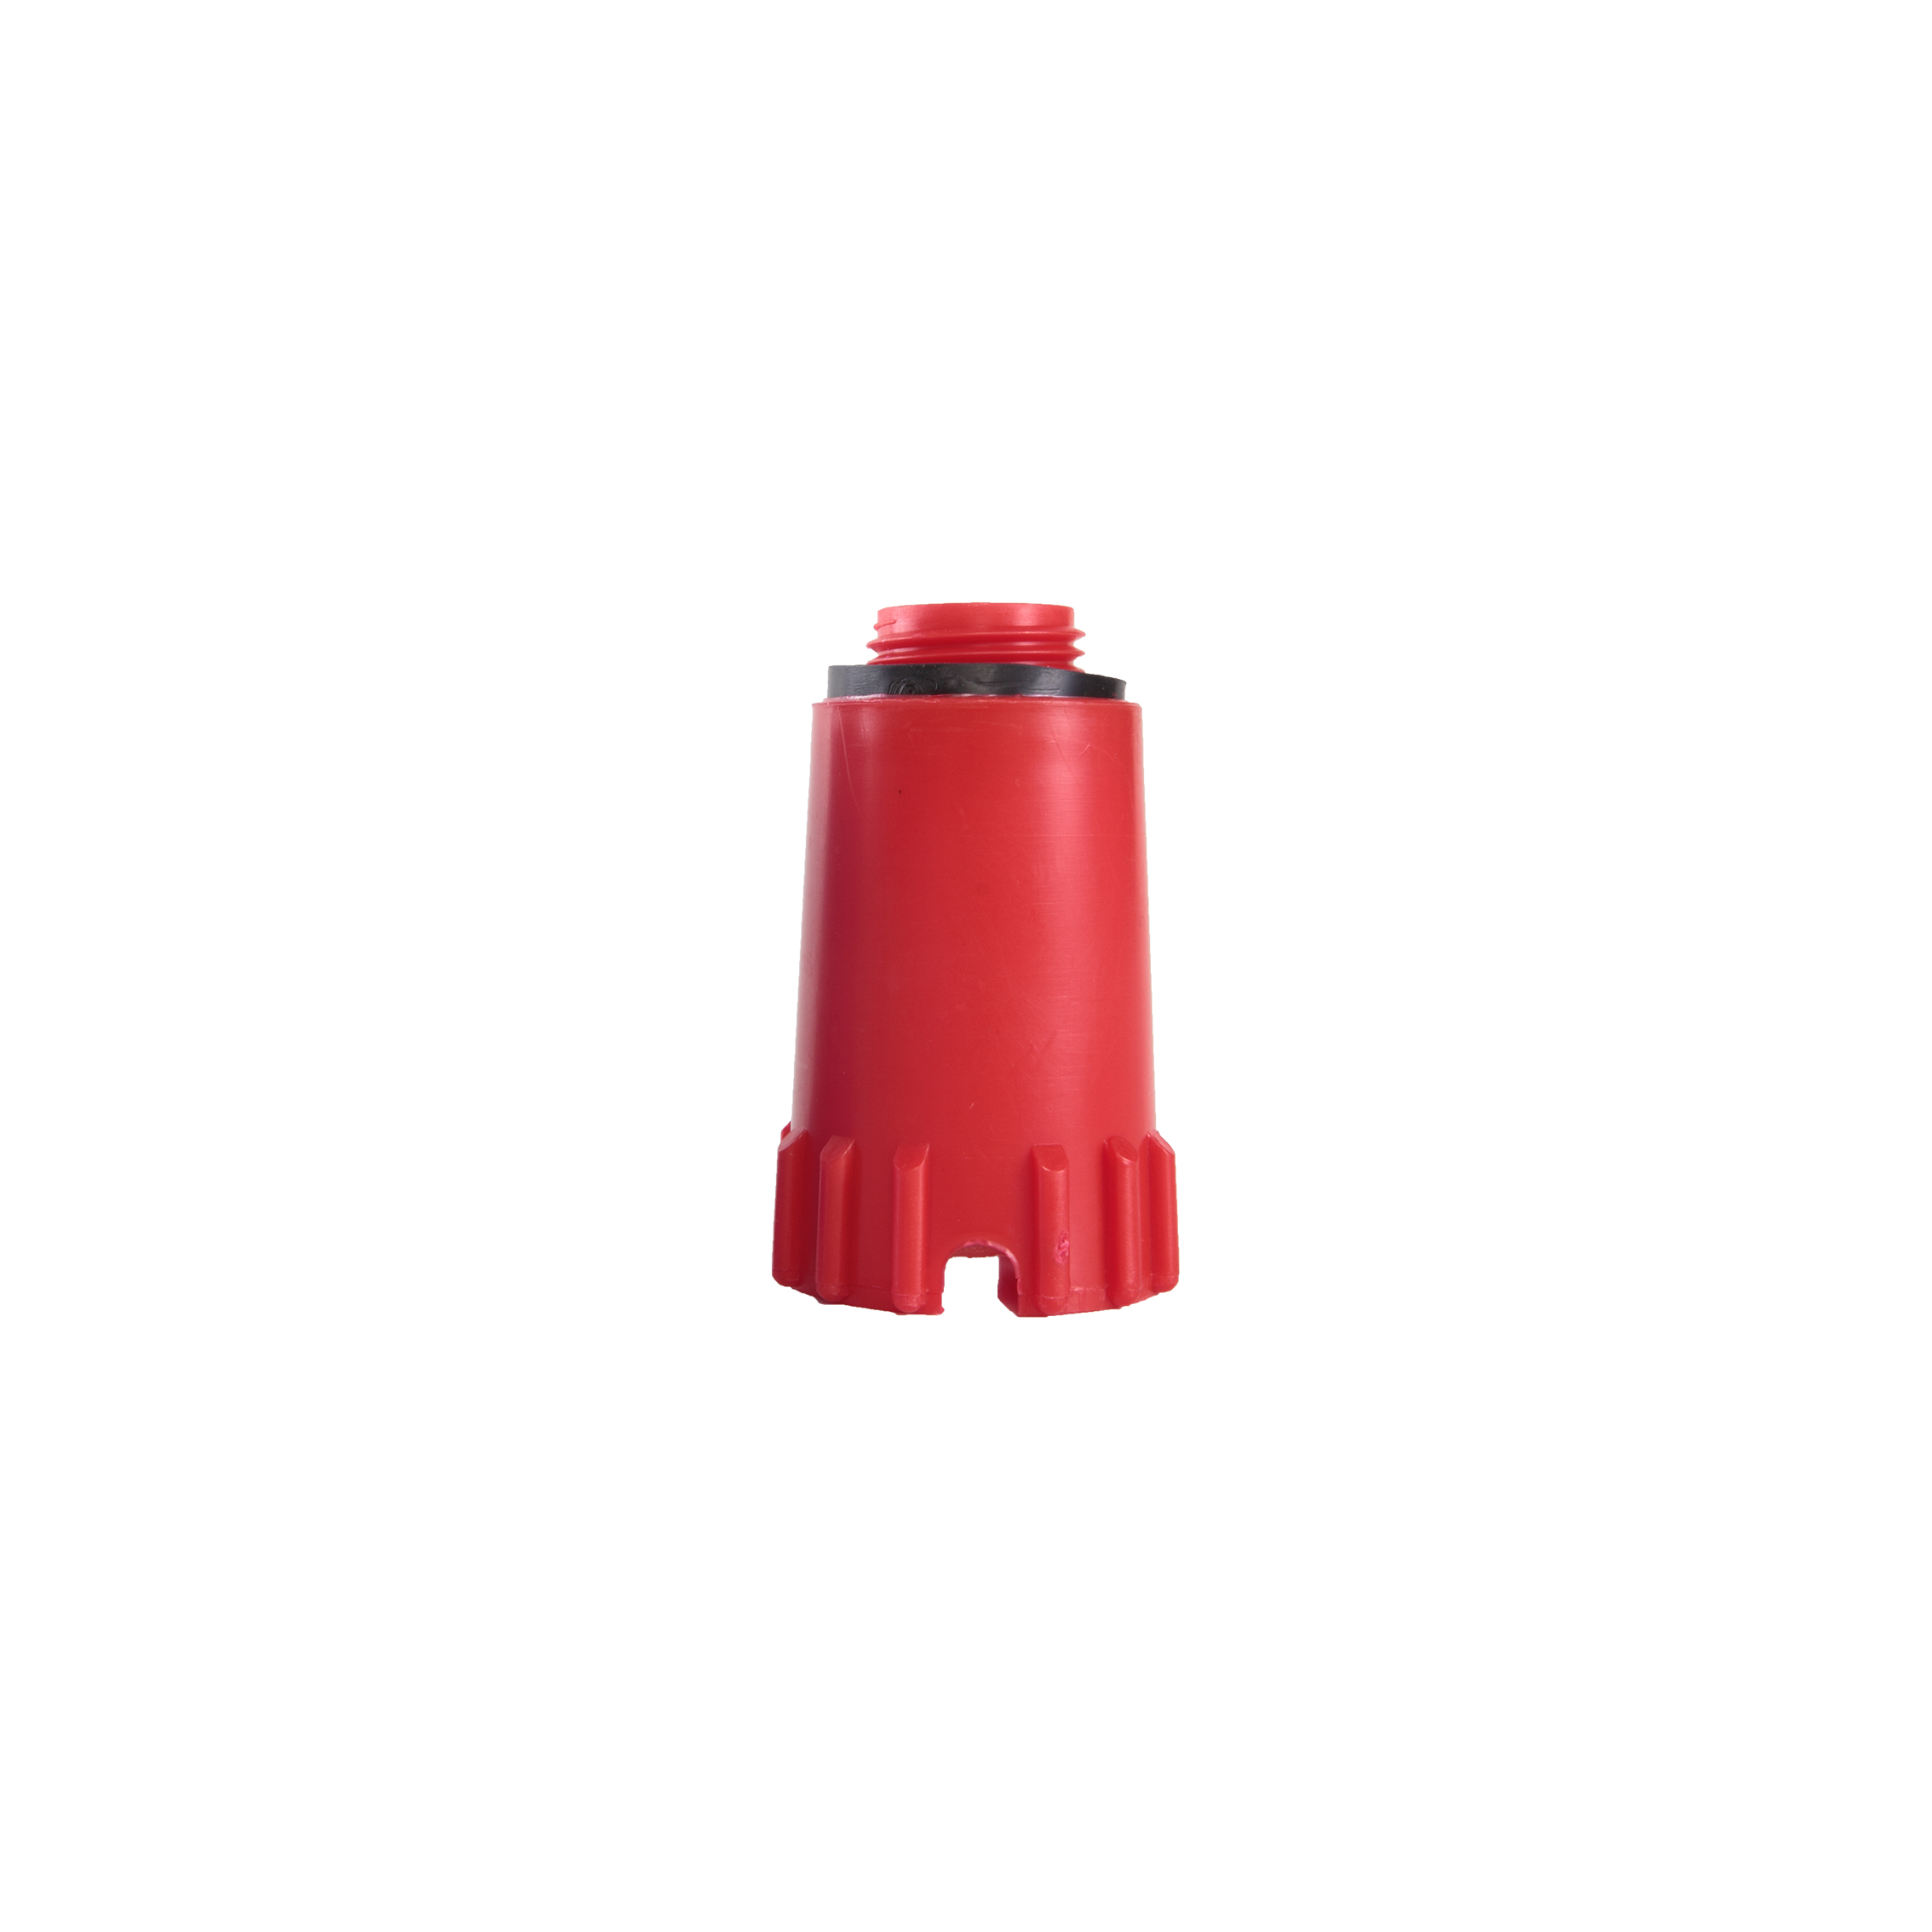 Blanking plug (1/2”, red)